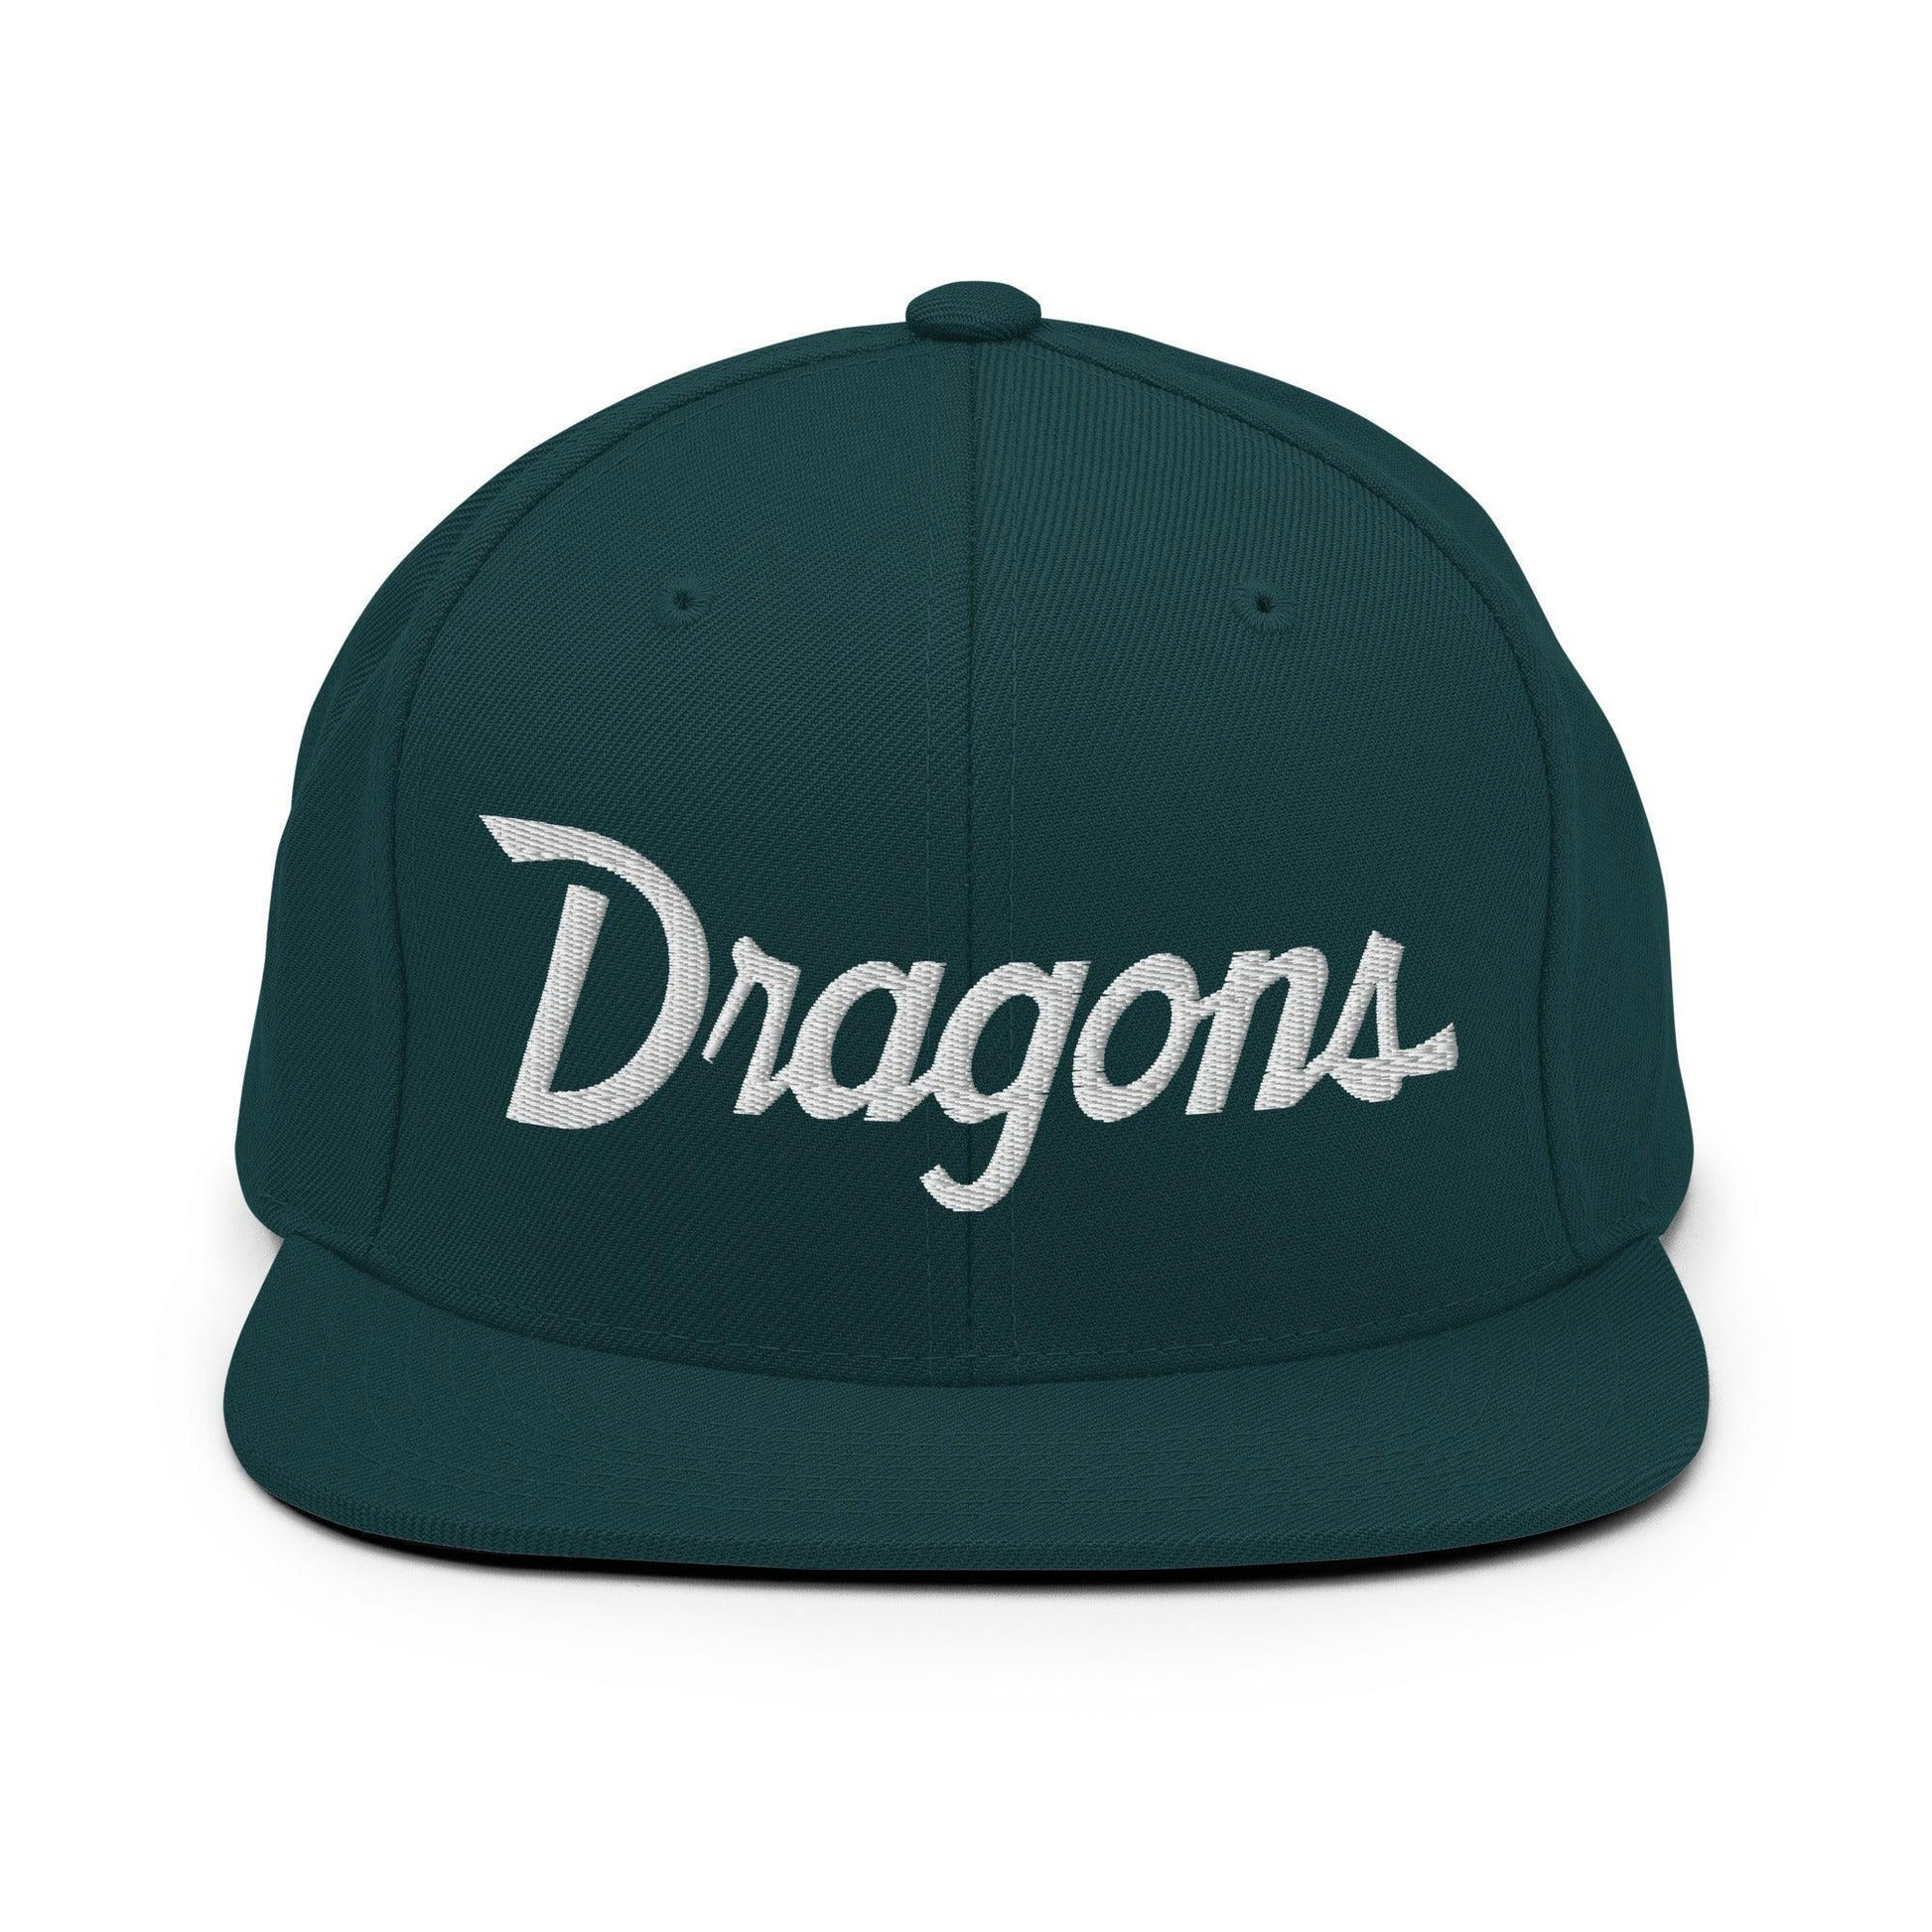 Dragons School Mascot Snapback Hat Spruce